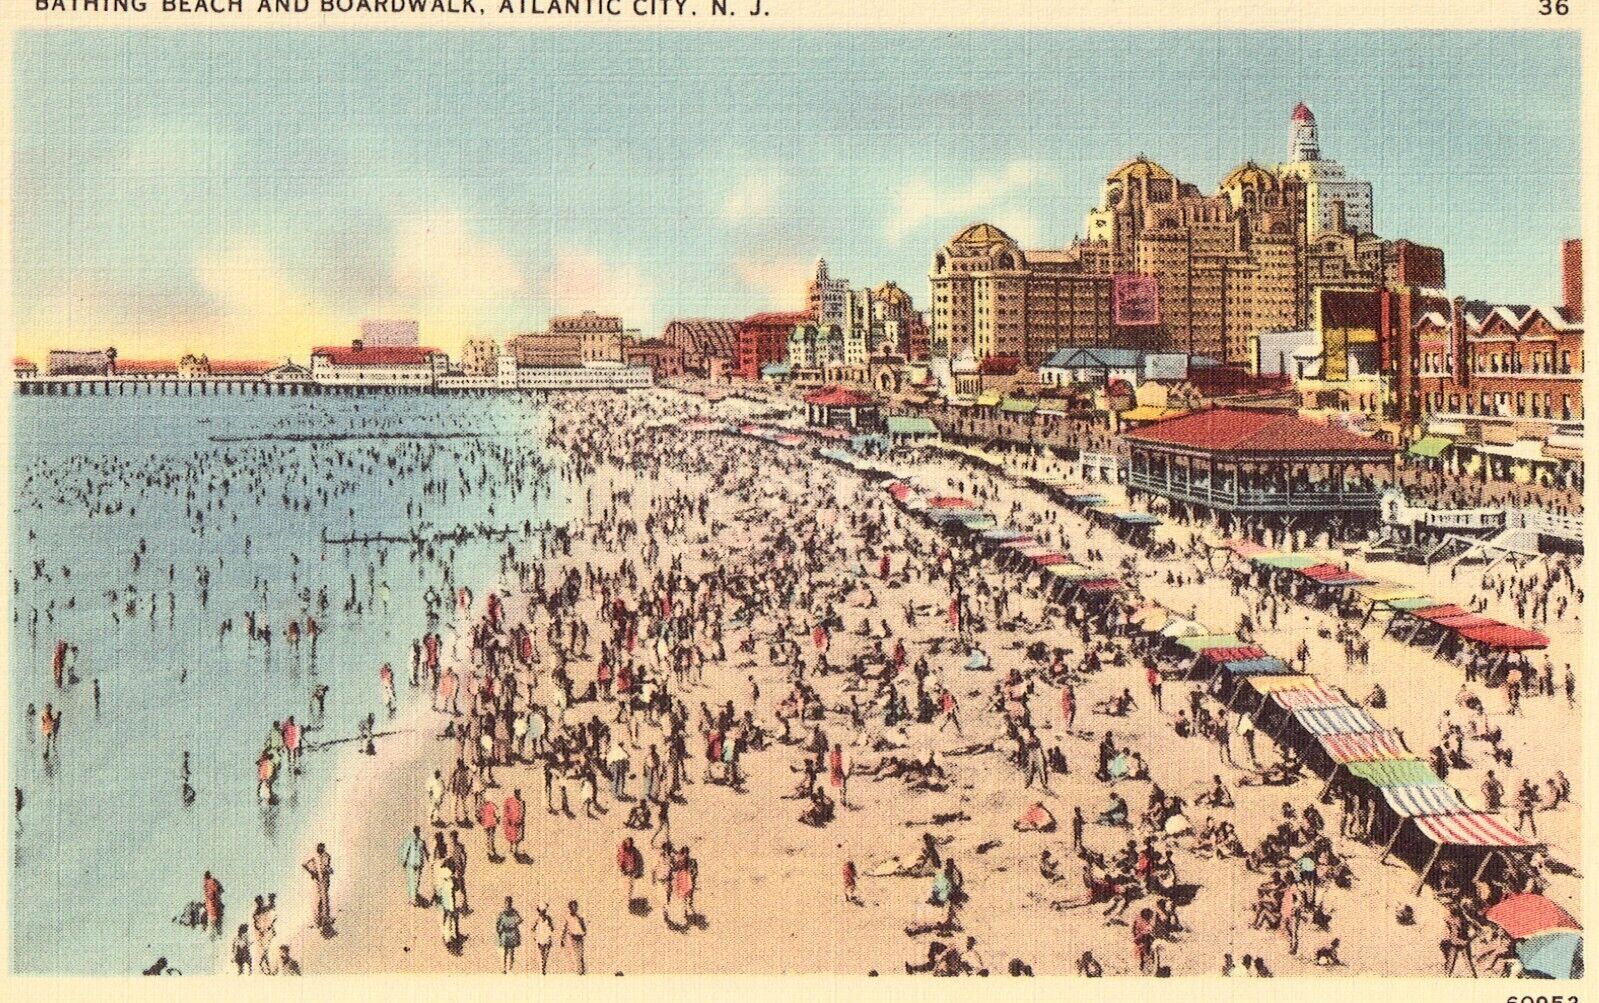 Bathing Beach and Boardwalk - Atlantic City, New Jersey Linen Postcard